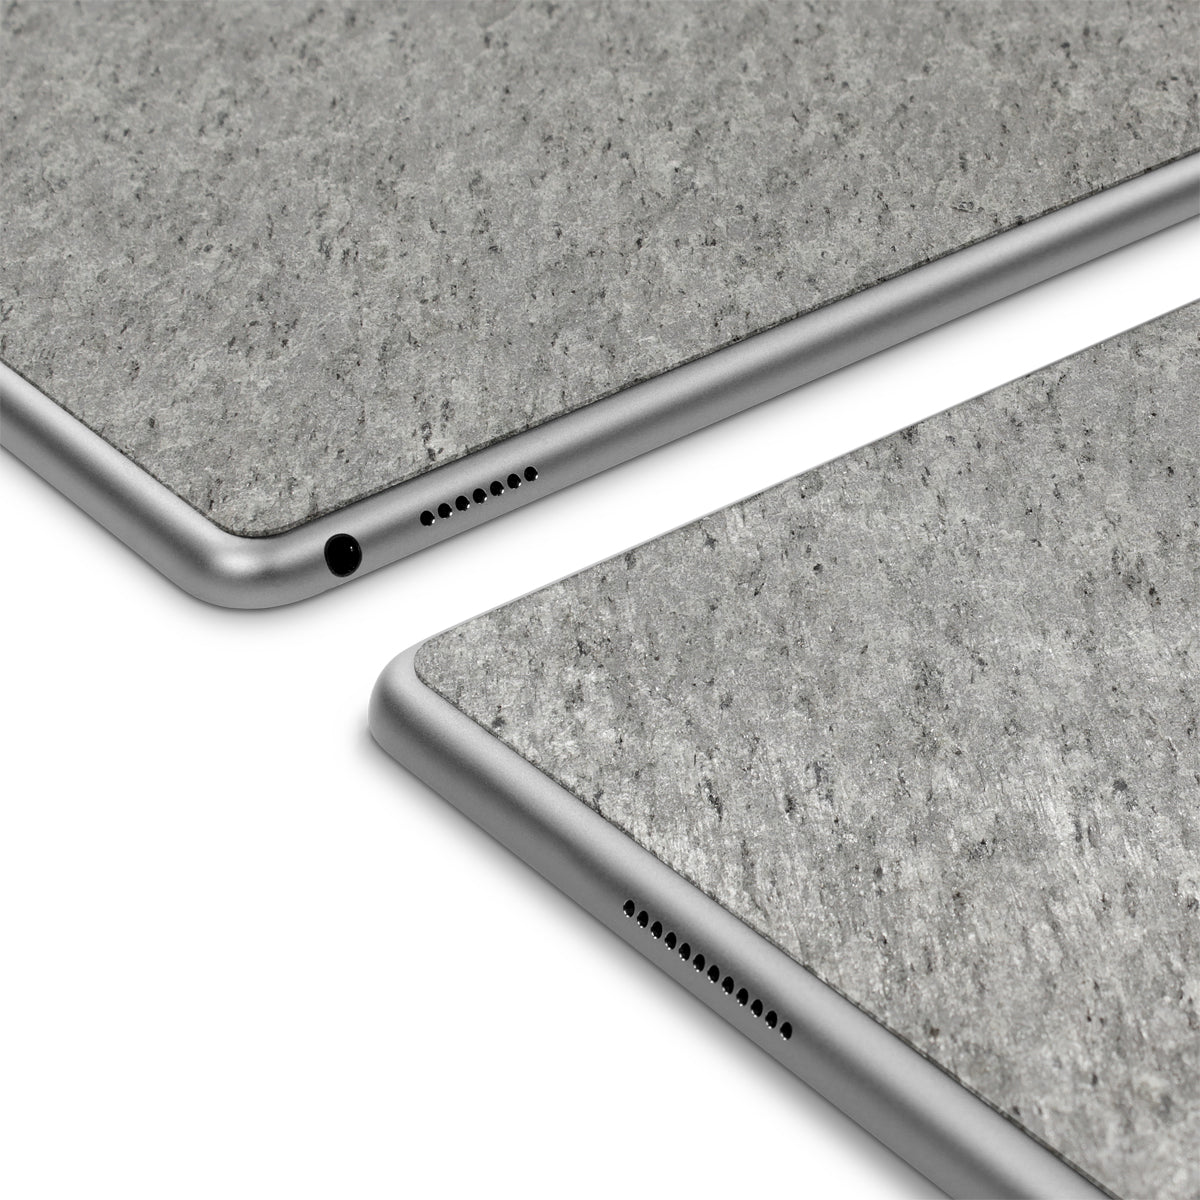 iPad Pro 9.7-inch  —  Stone Skin